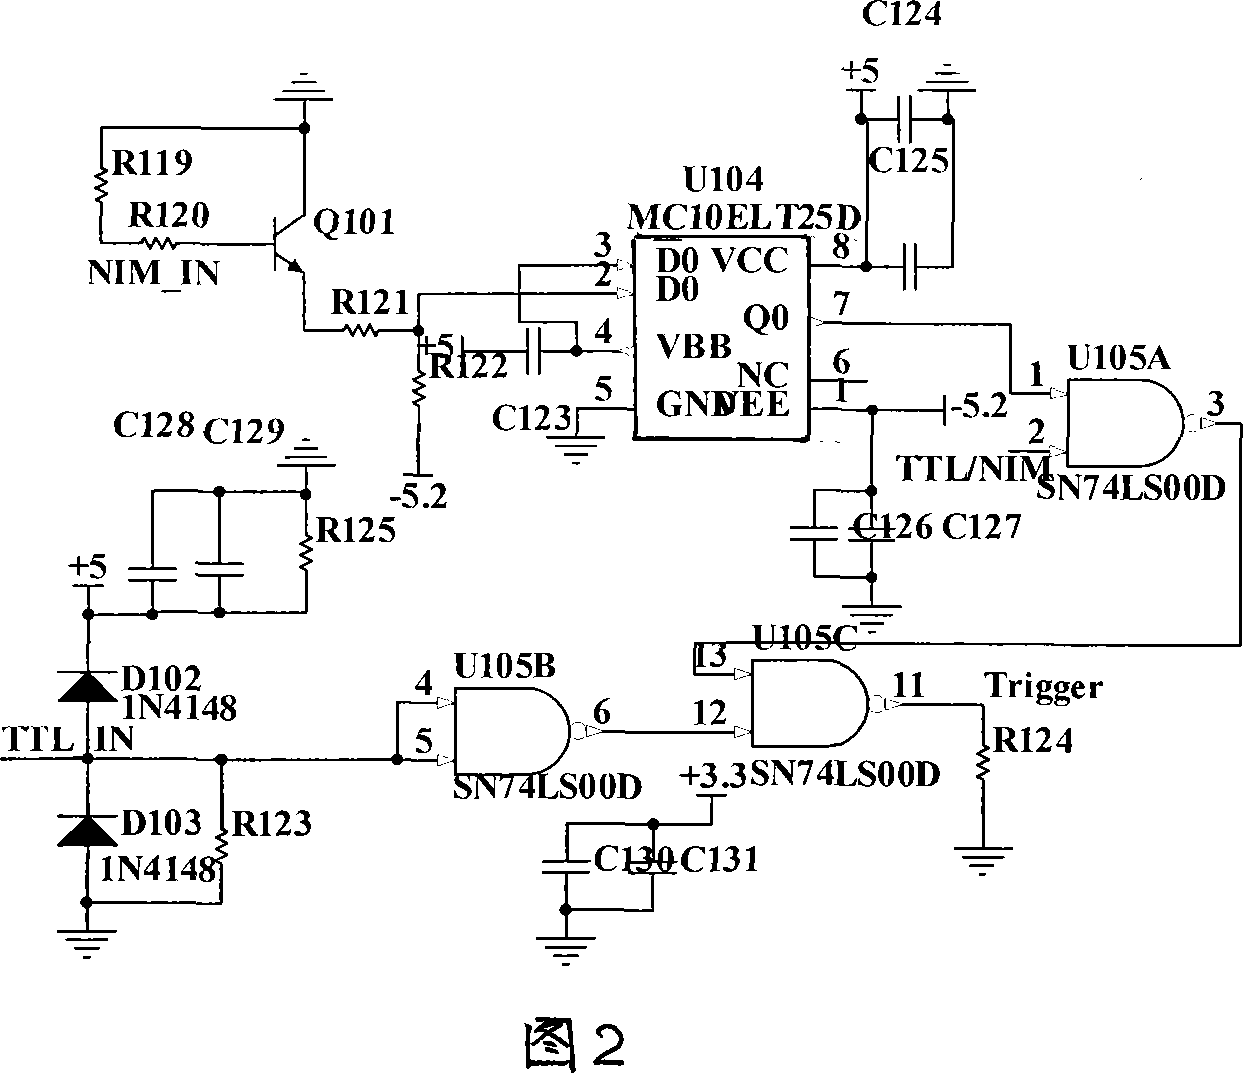 APD single photon detection circuit module